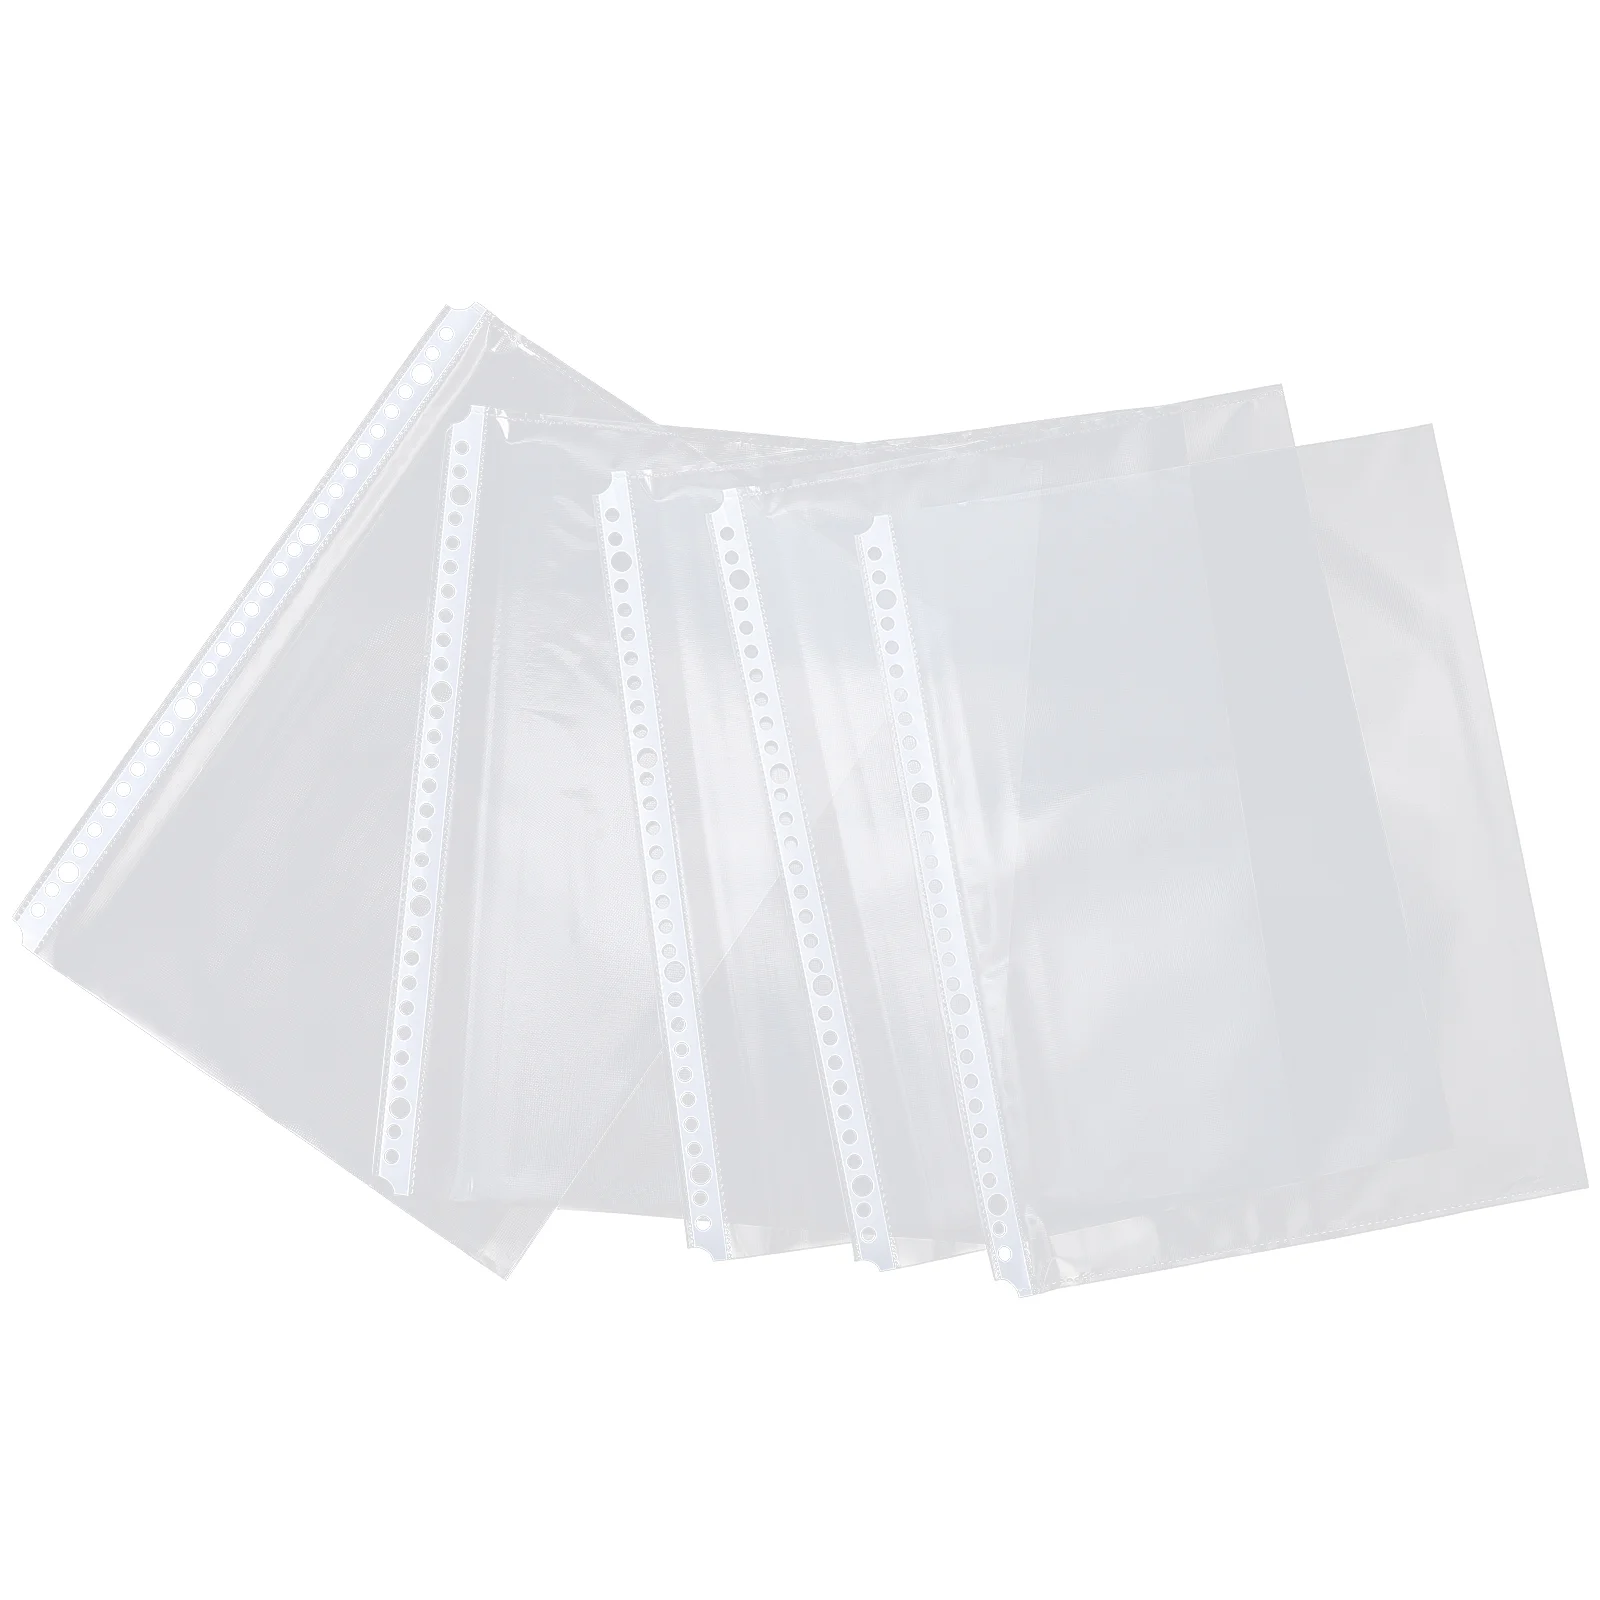 

100 Pcs inside Folder Folders Transparent Inner Page Bag Plastic Loose Leaf Pouch Protective Film Clear Binder File Protector